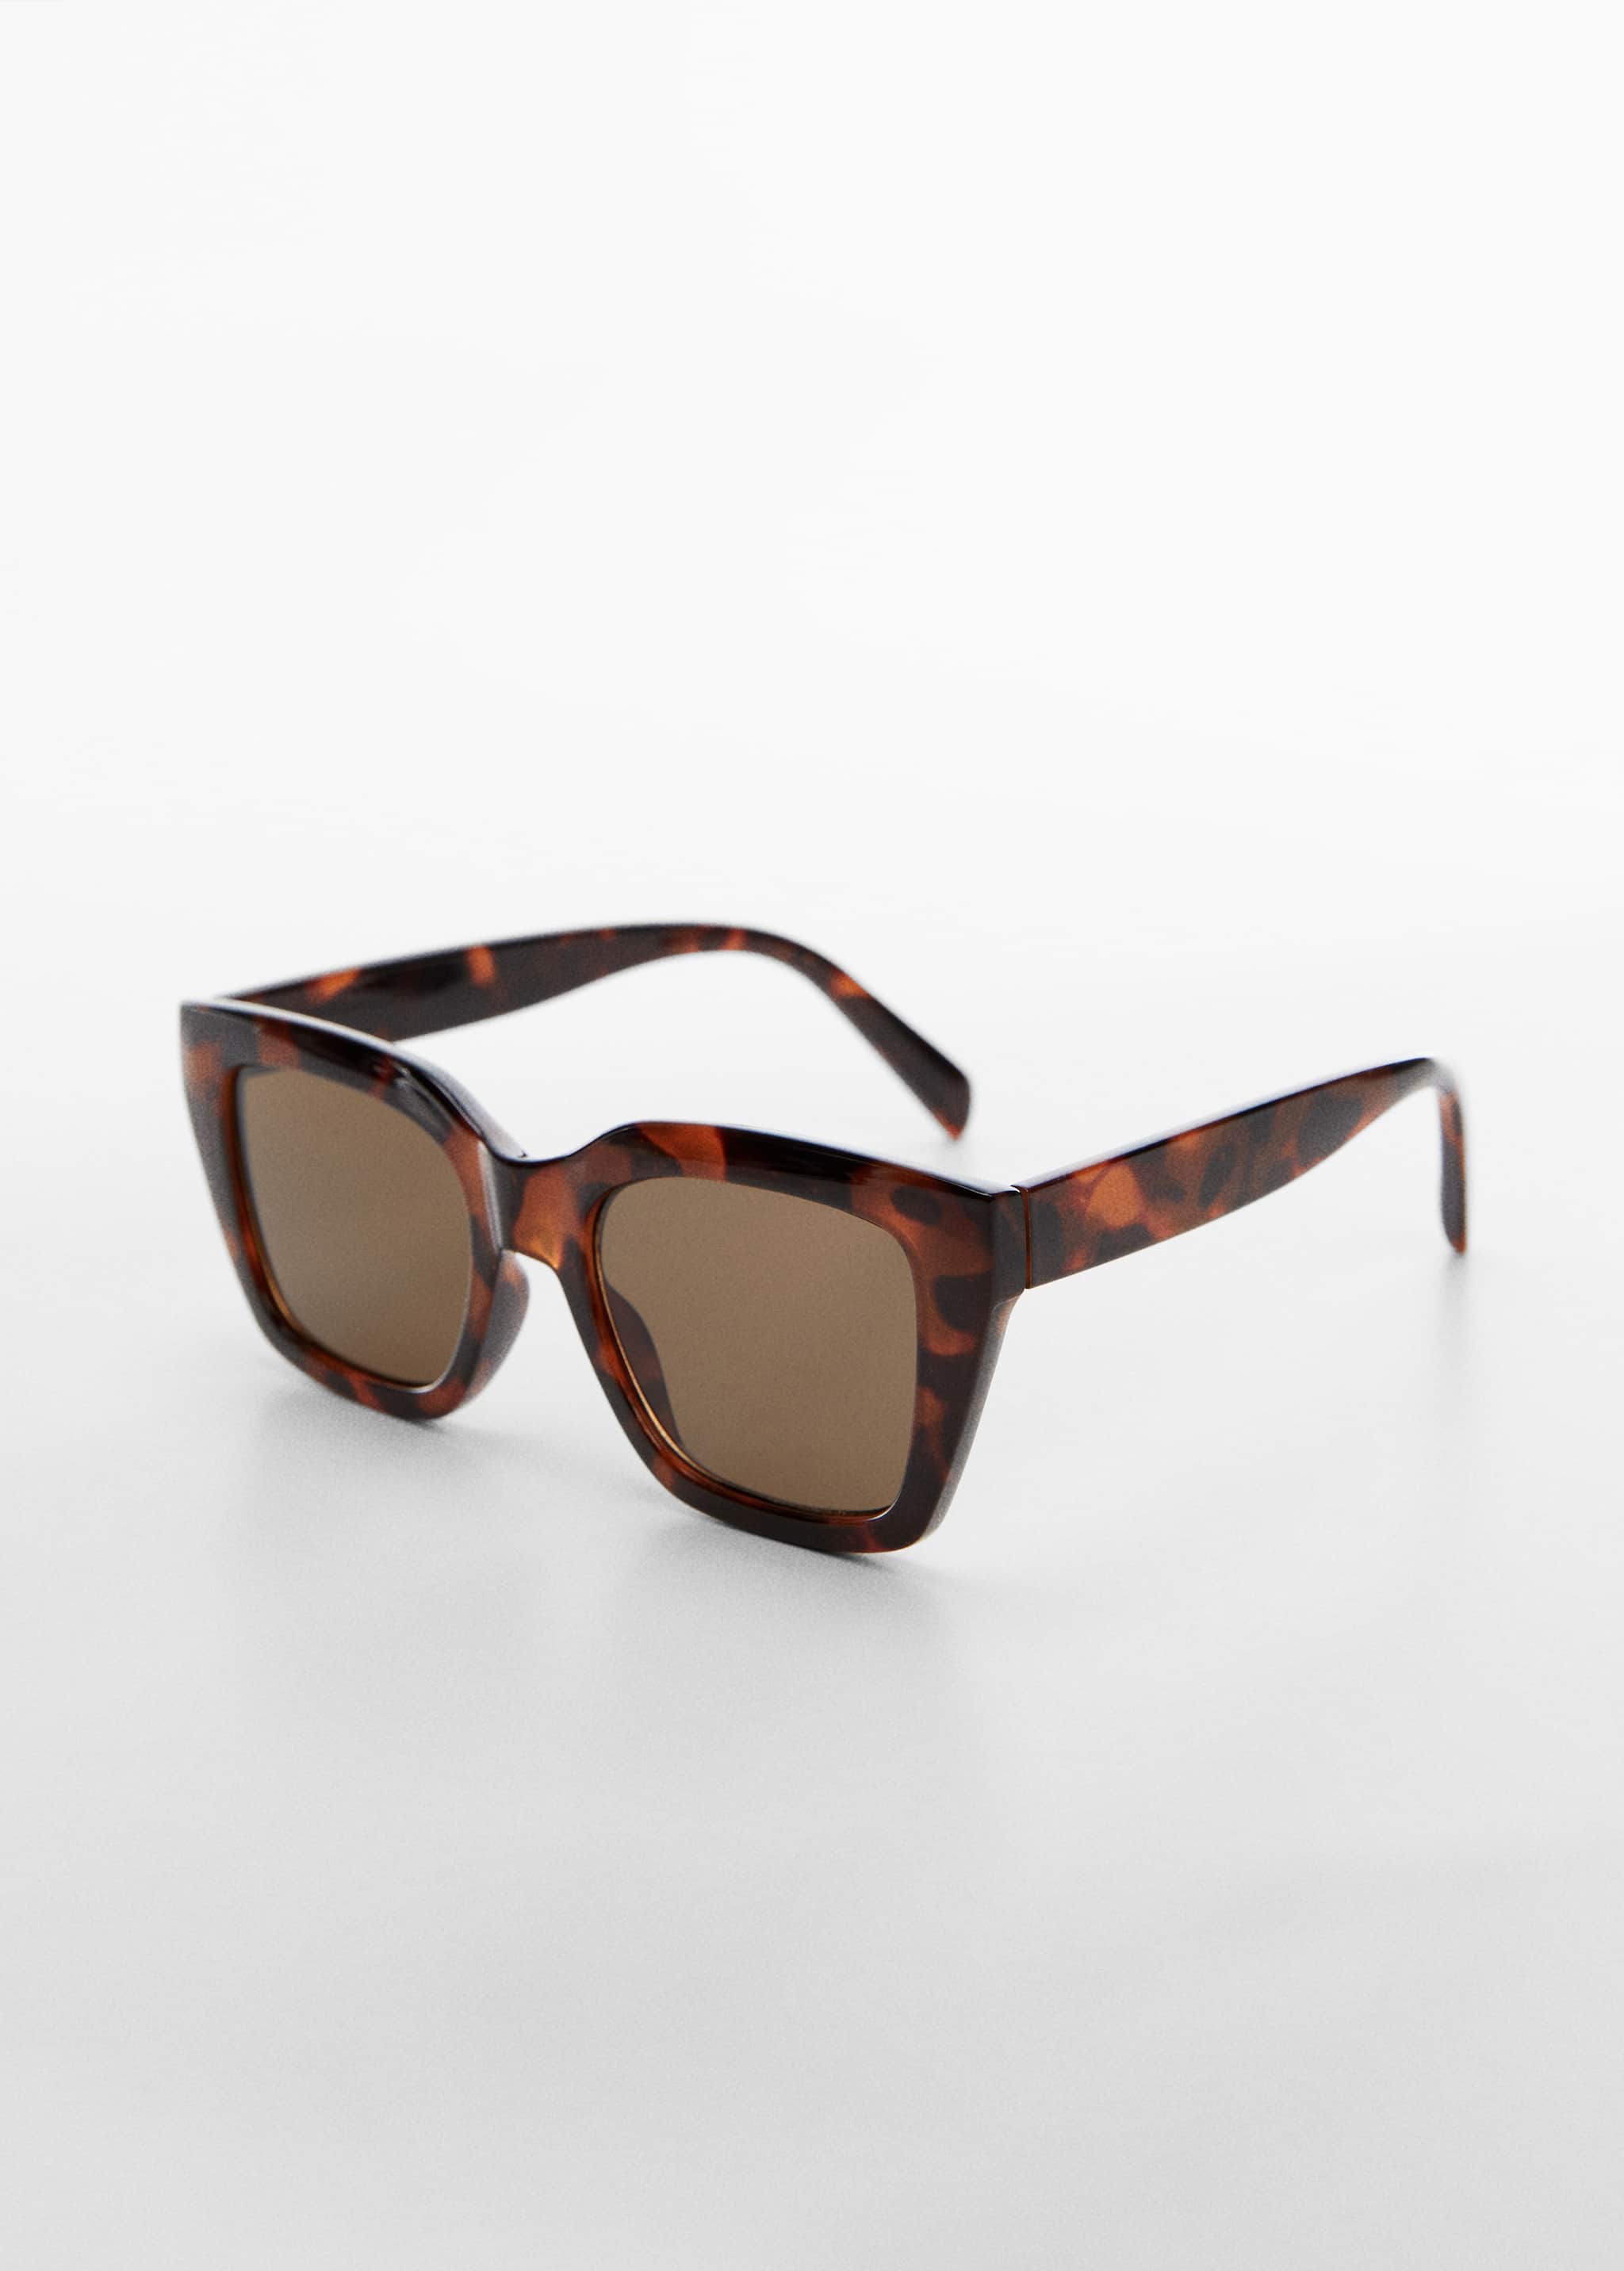 Squared frame sunglasses - Medium plane